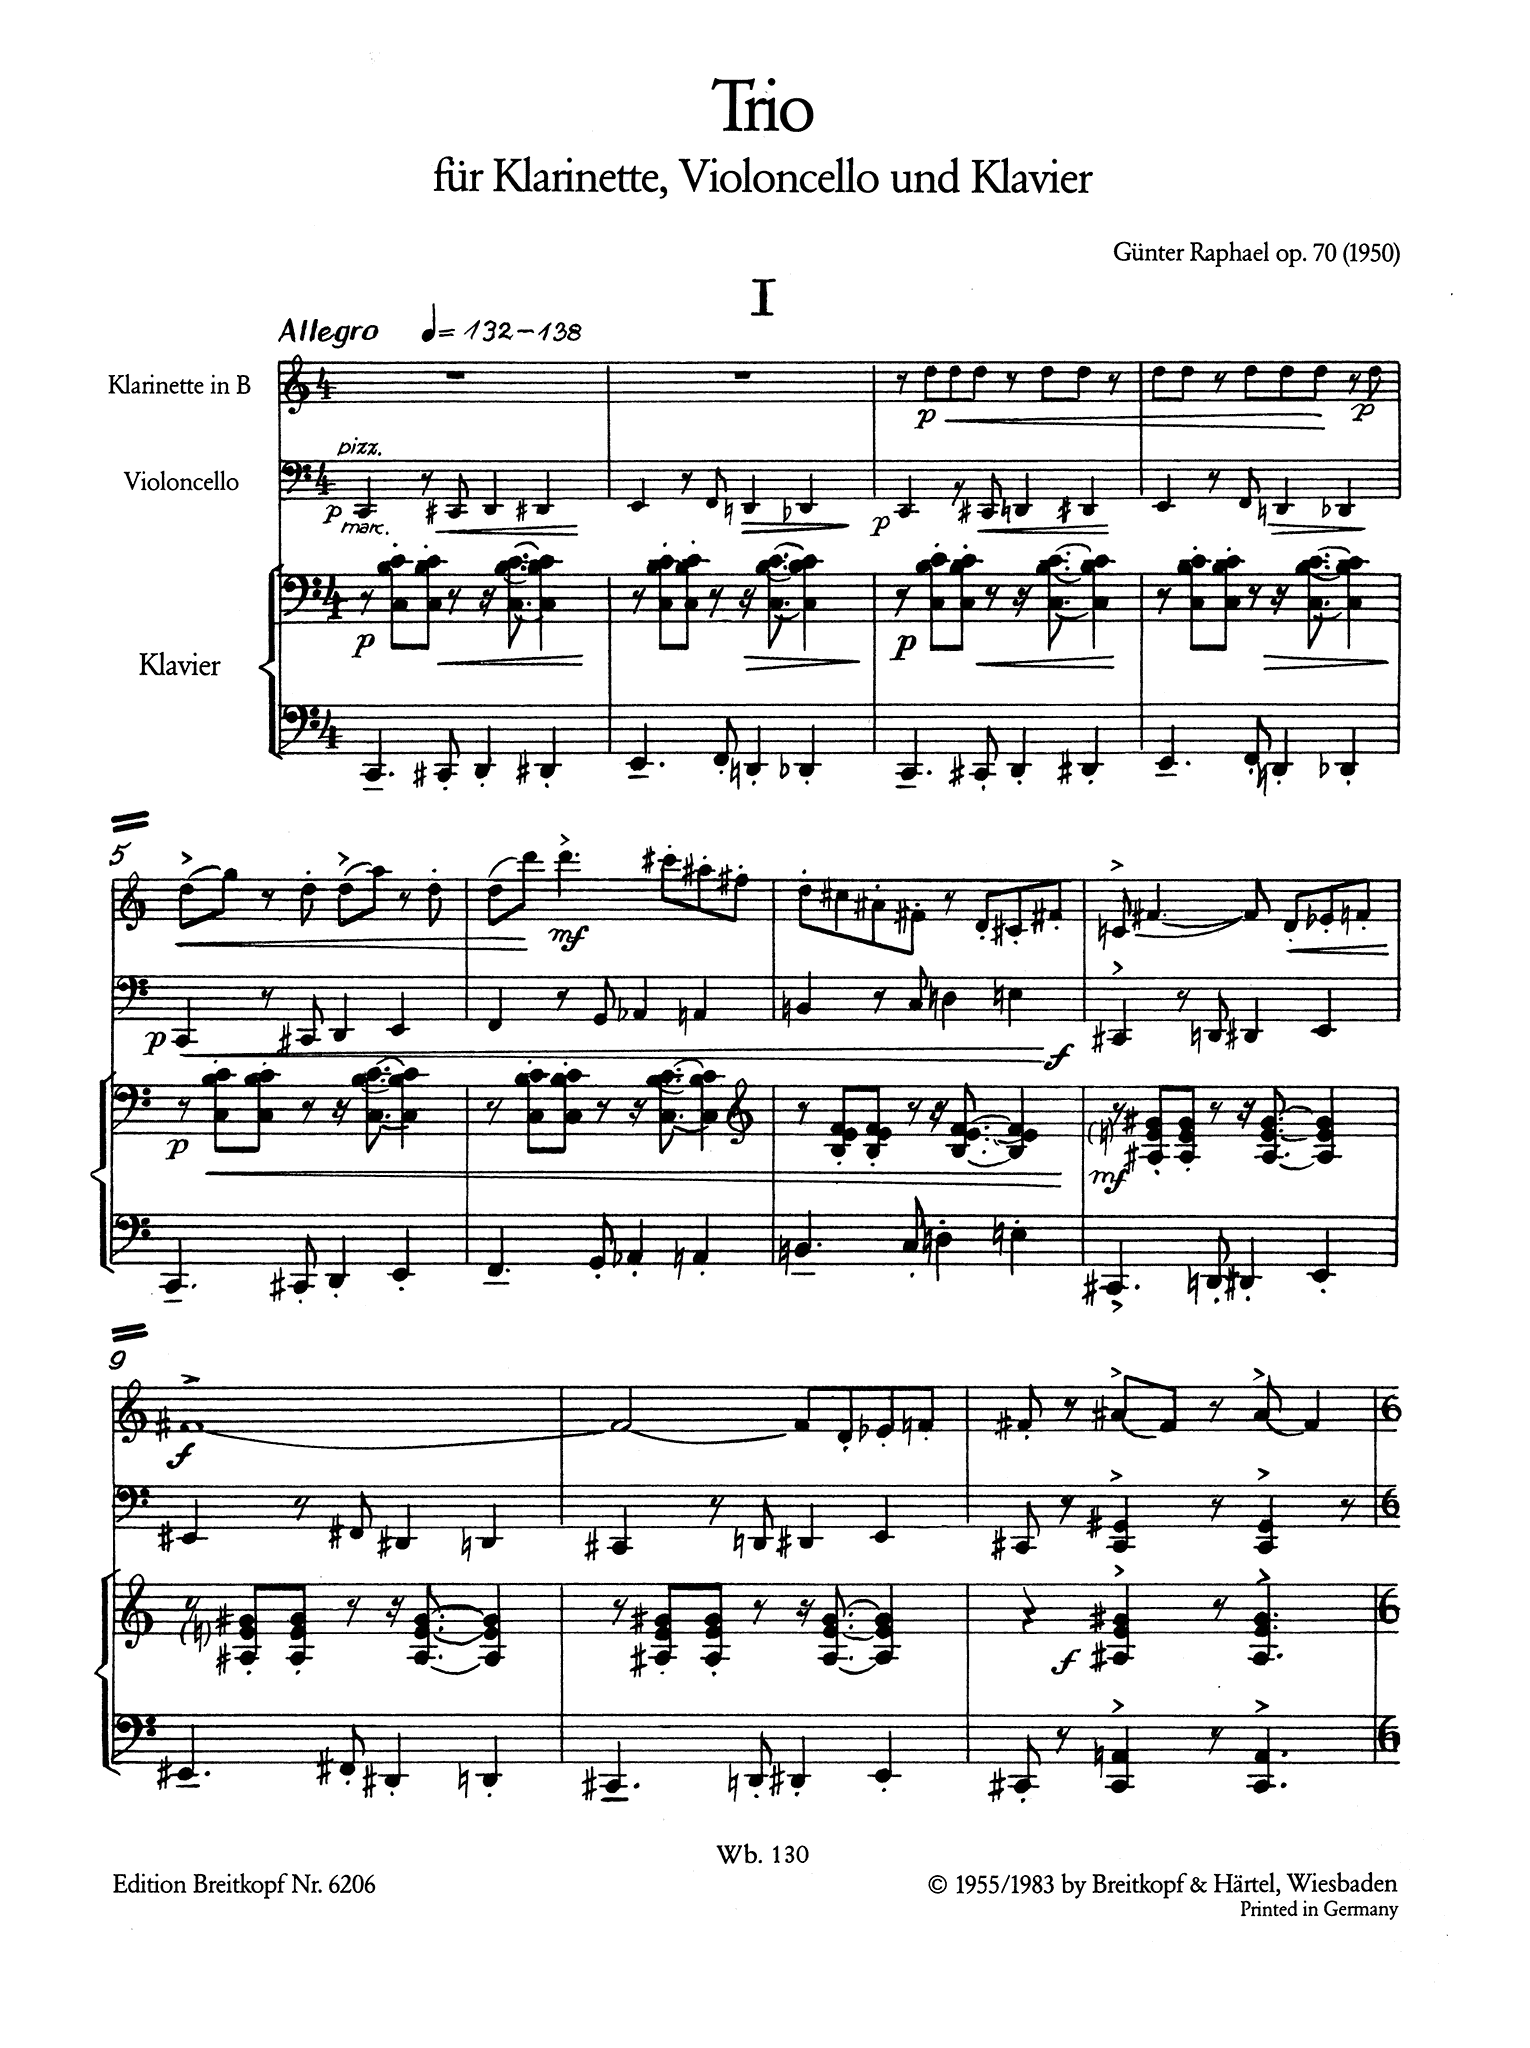 Günter Raphael Trio, Op. 70 - Movement 1